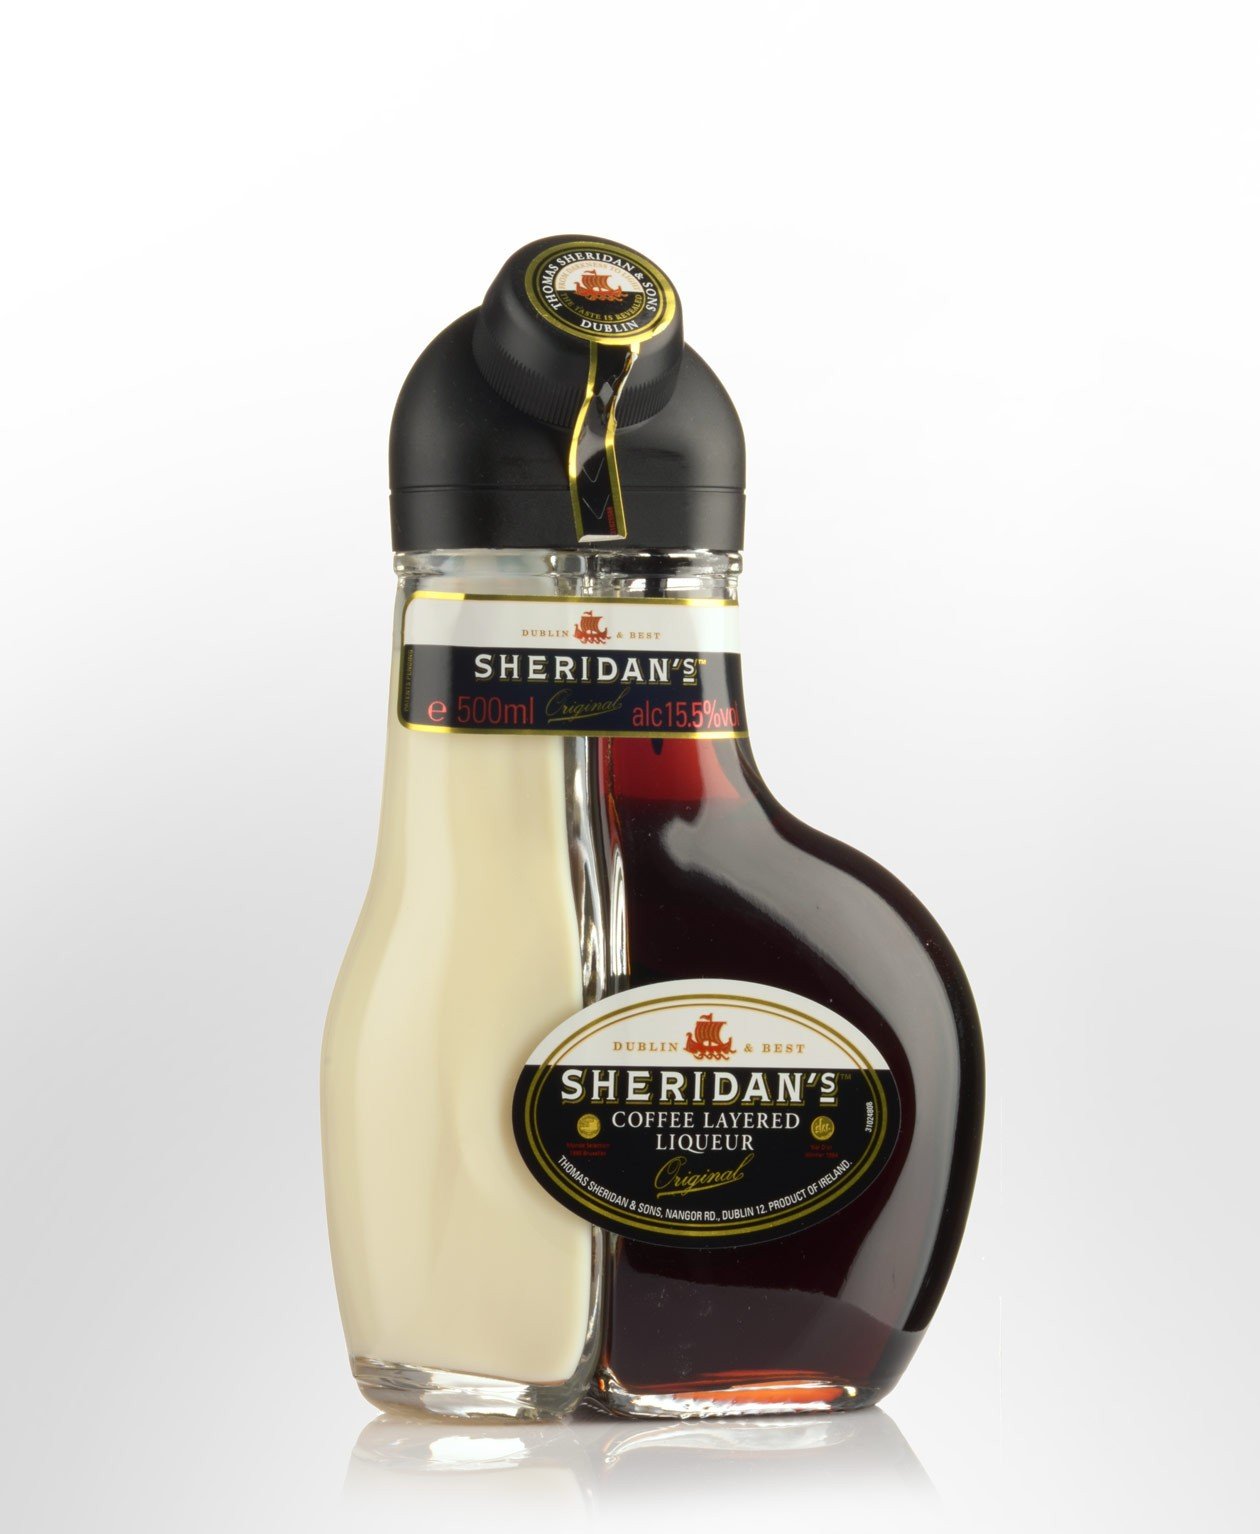 Ликер темный. Ликер черри Шериданс. Ликер Sheridan's Original Coffee layered Liqueur. Белис Шеридан. Бейлис и Шериданс.